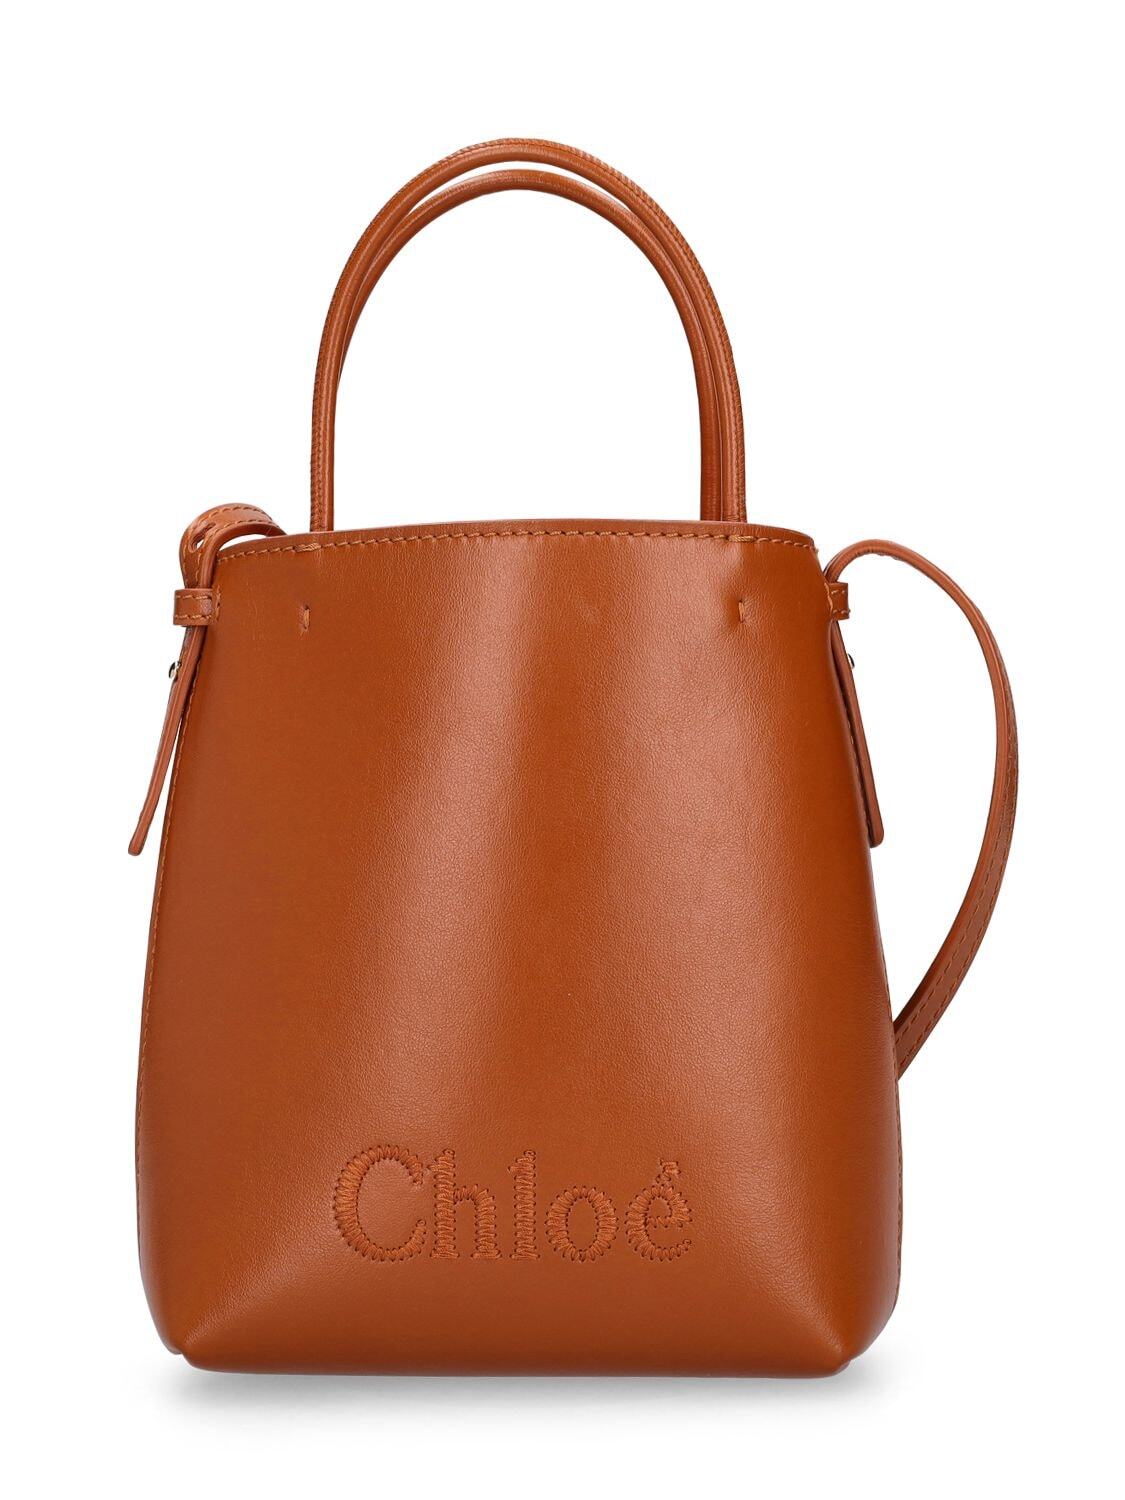 CHLOÉ Chloé Sense Leather Top Handle Bag